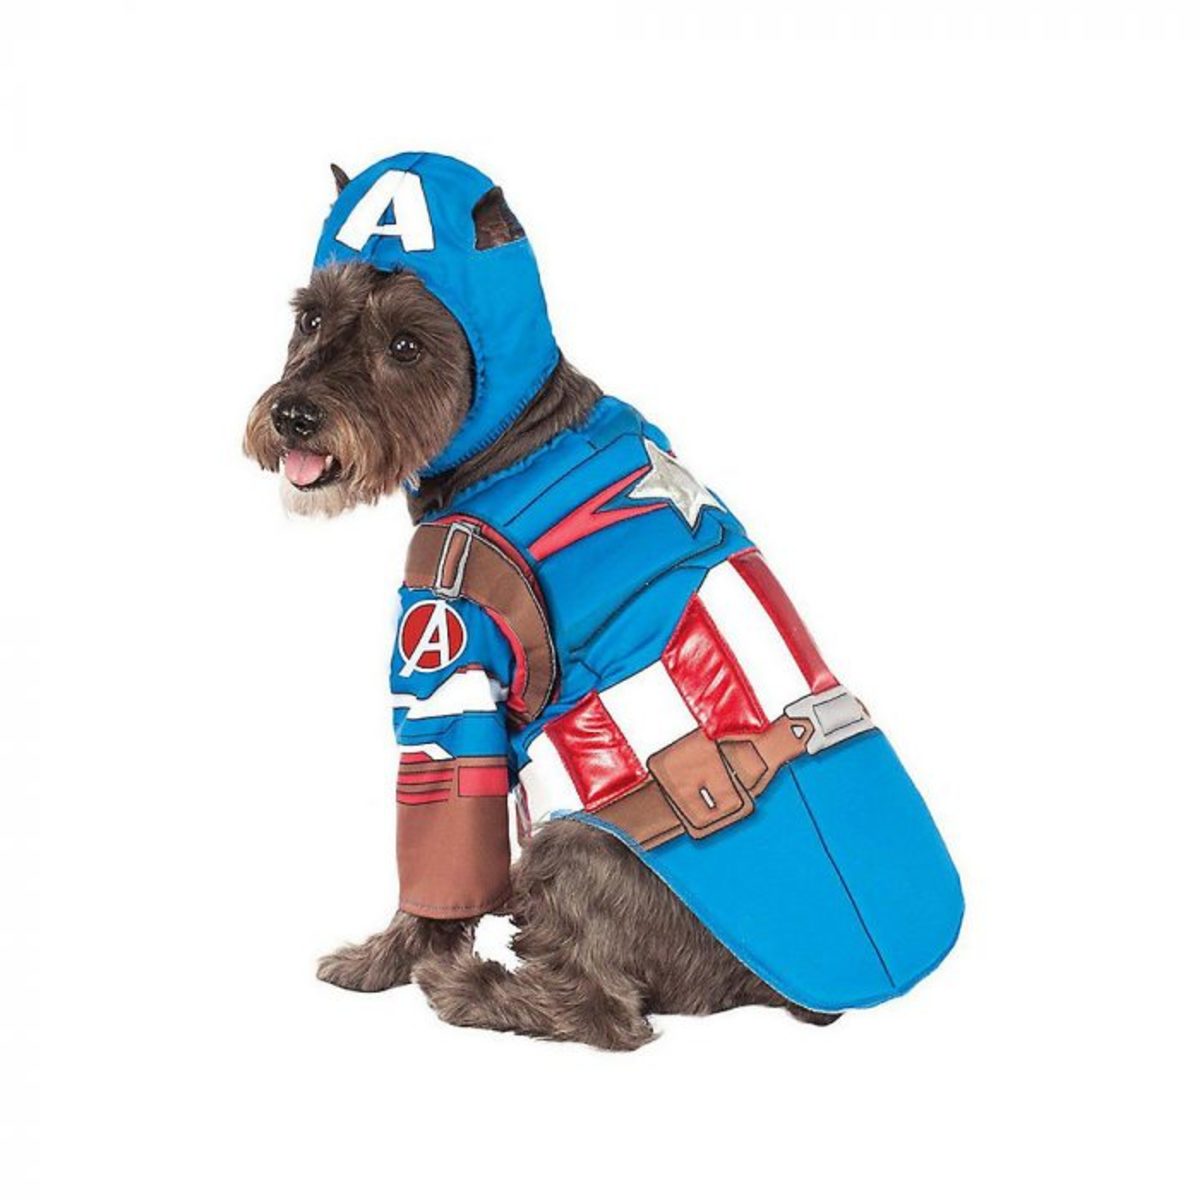 Avengers Captain America Dog Halloween Costume